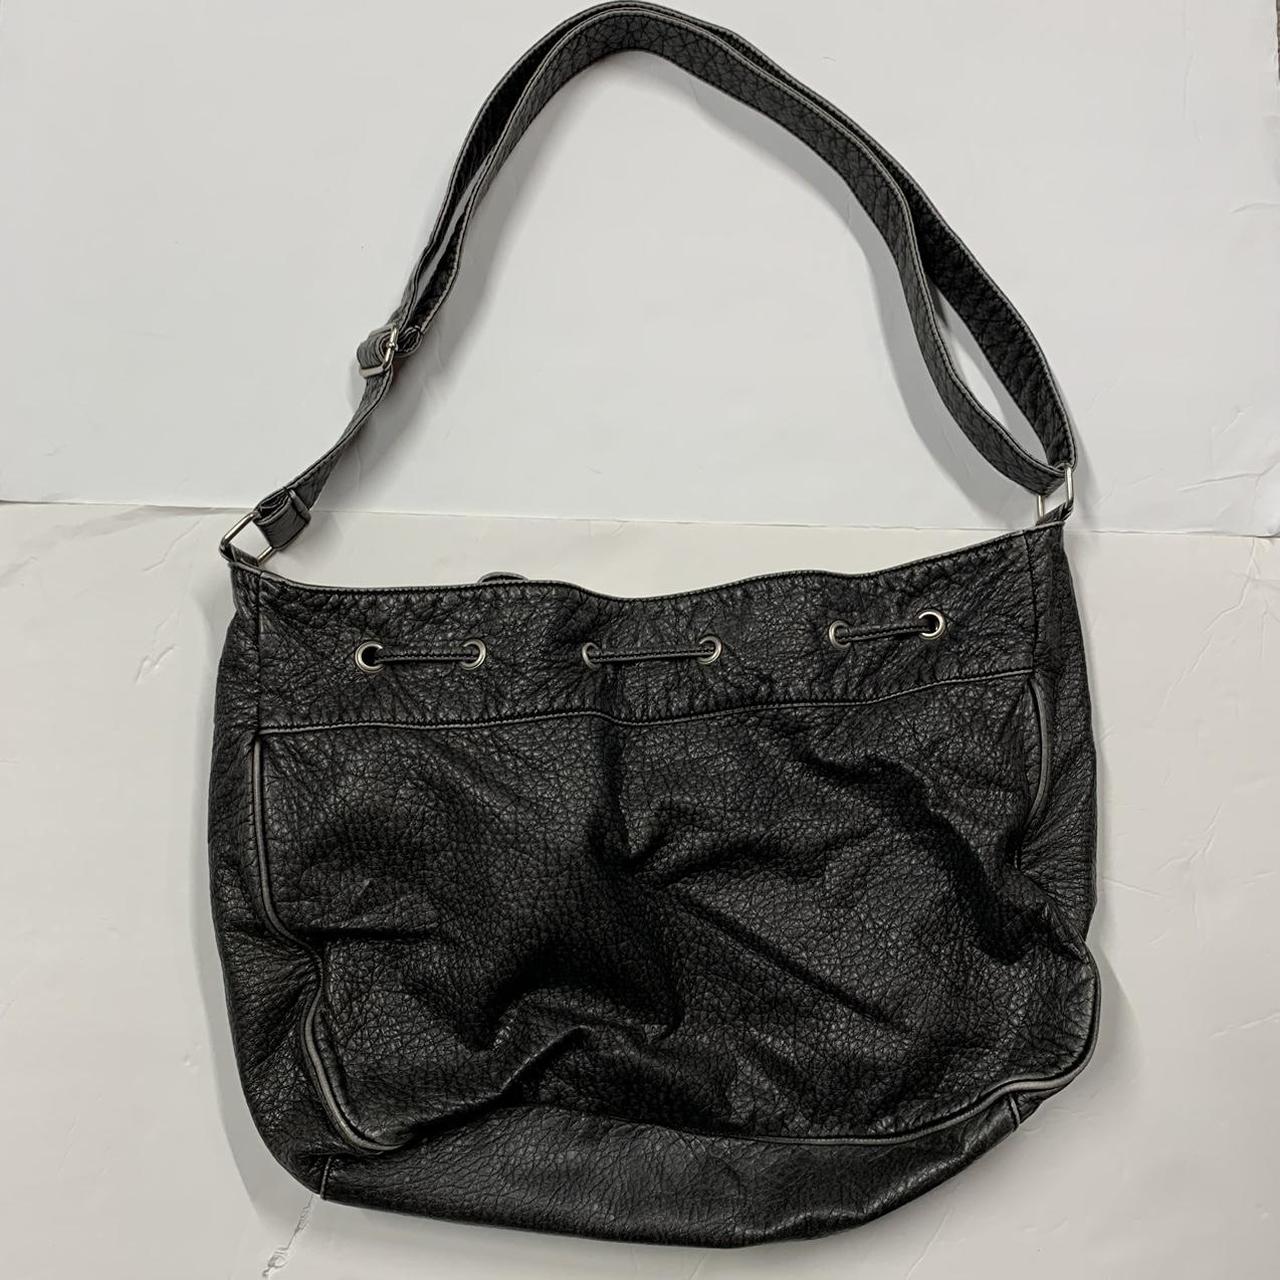 Women's Black and Silver Bag | Depop